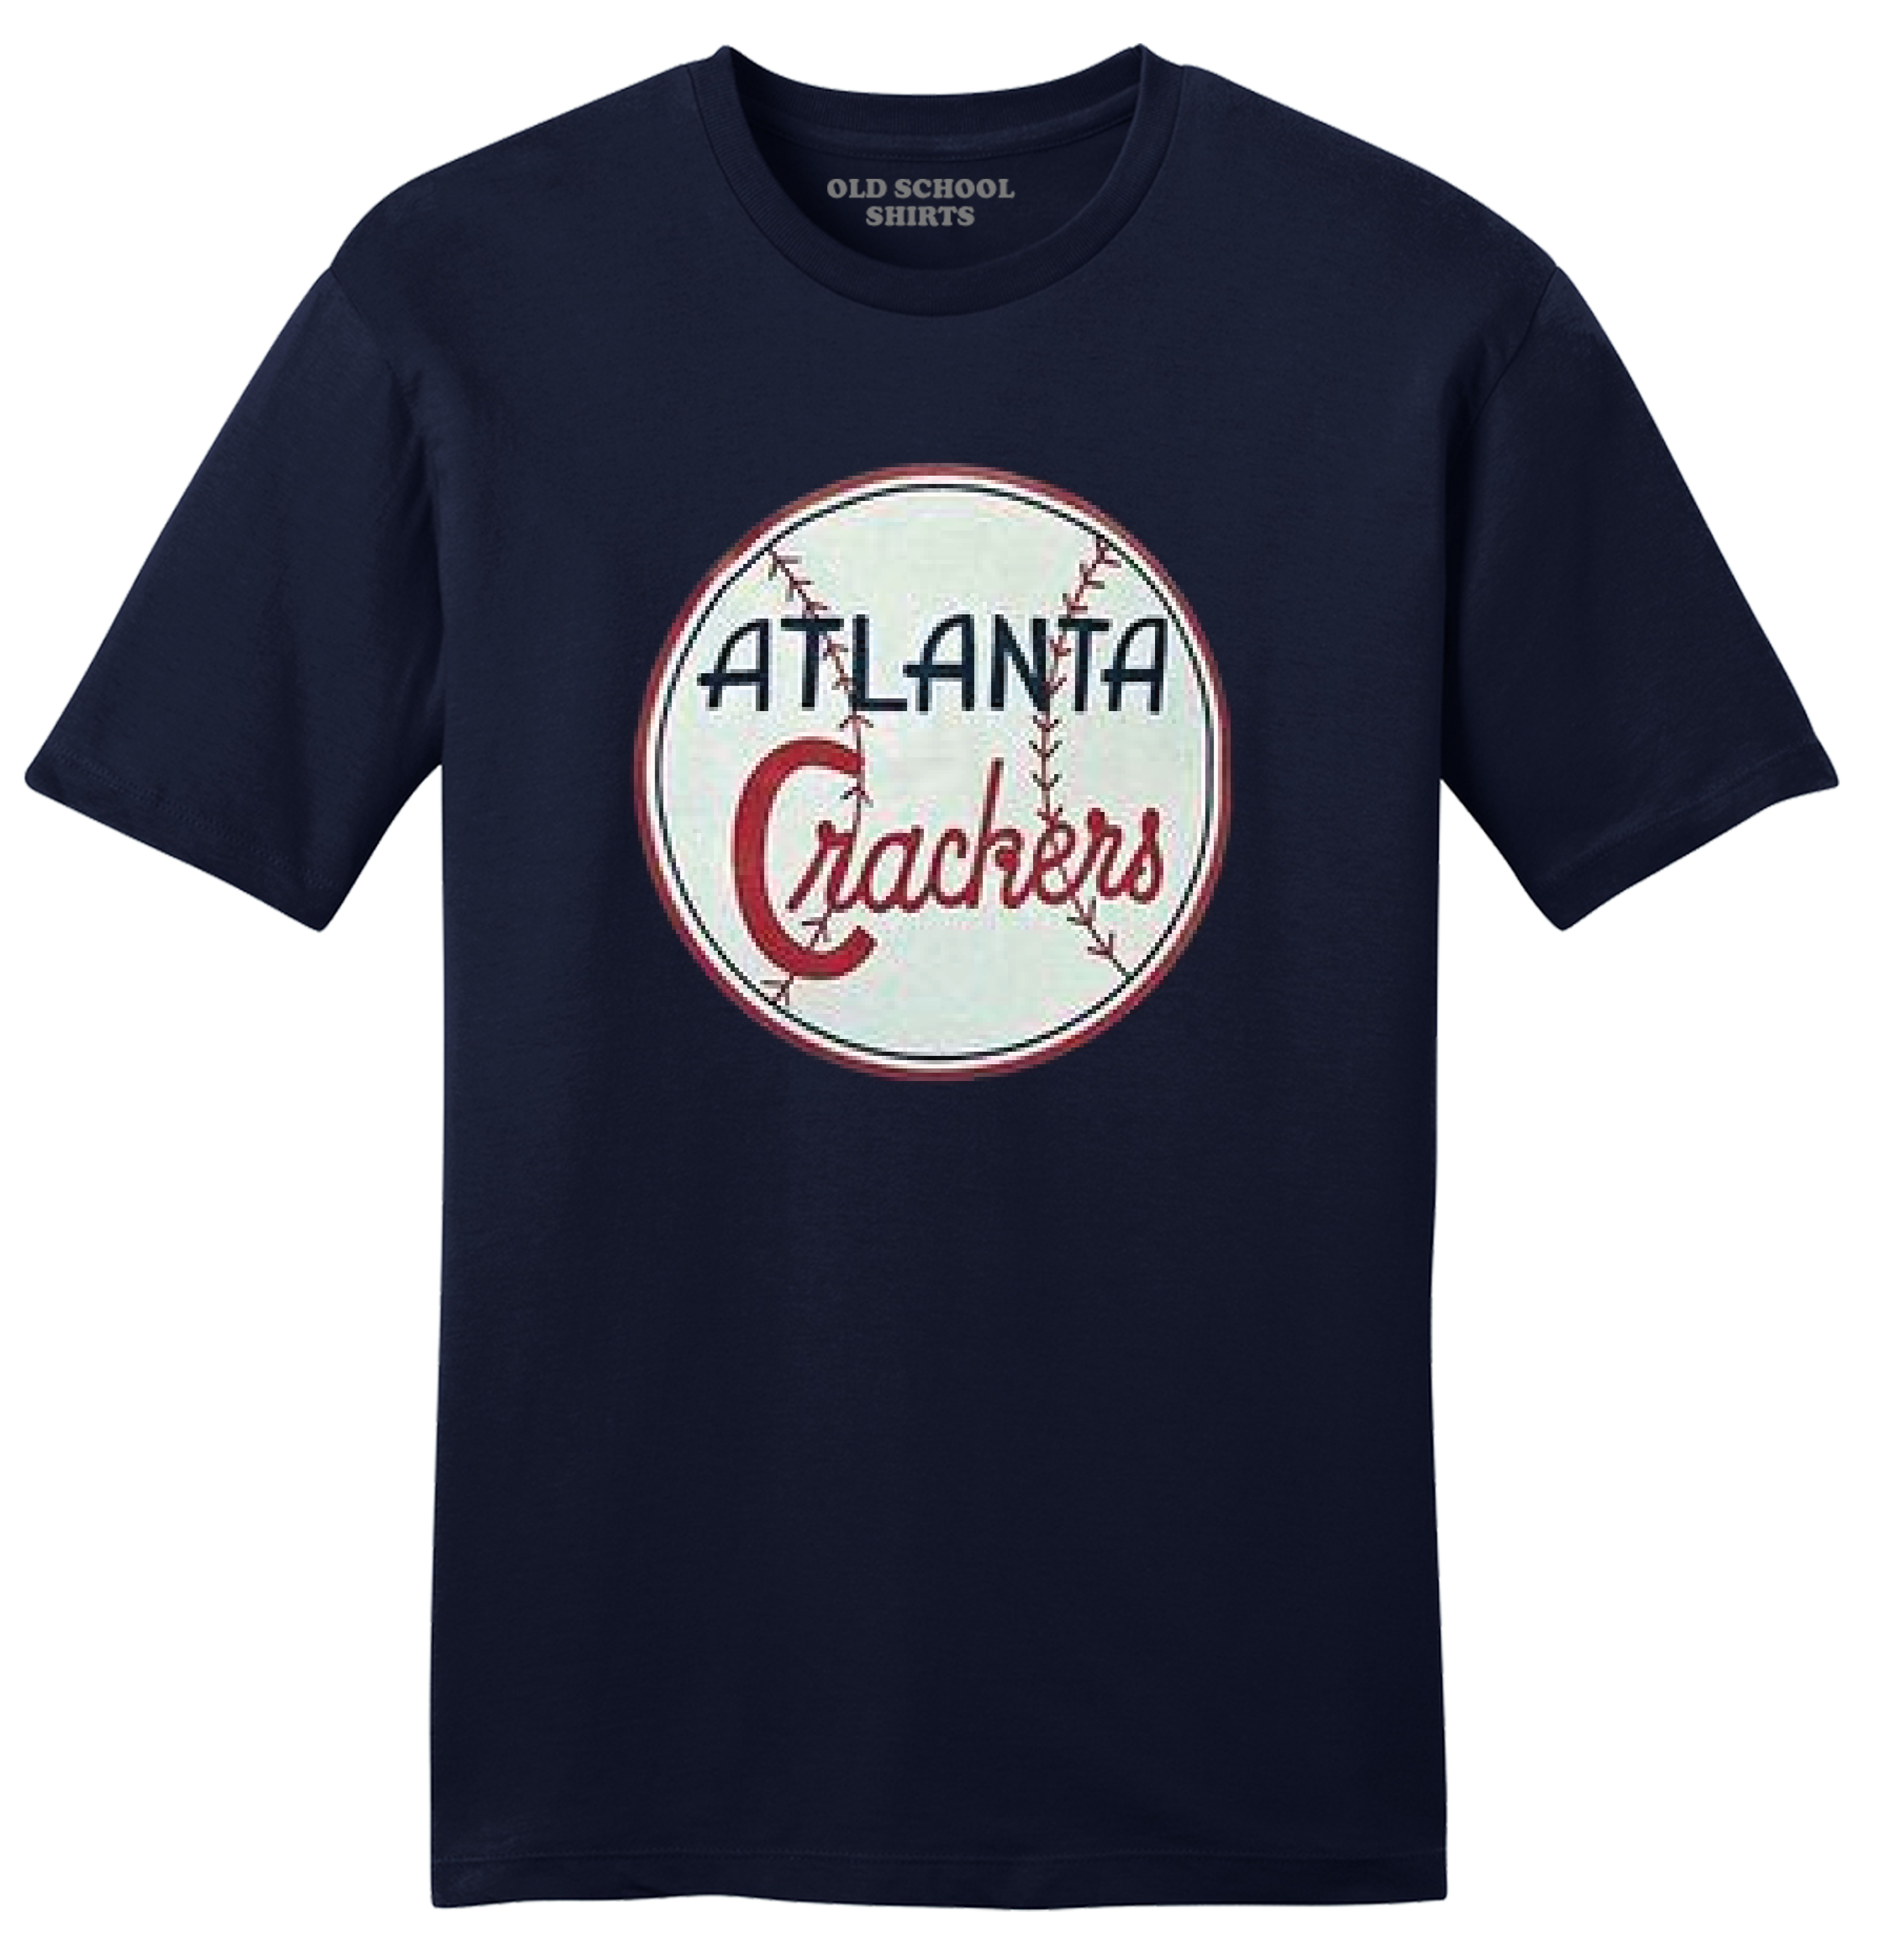 Atlanta Crackers Baseball, Vintage Sports Apparel